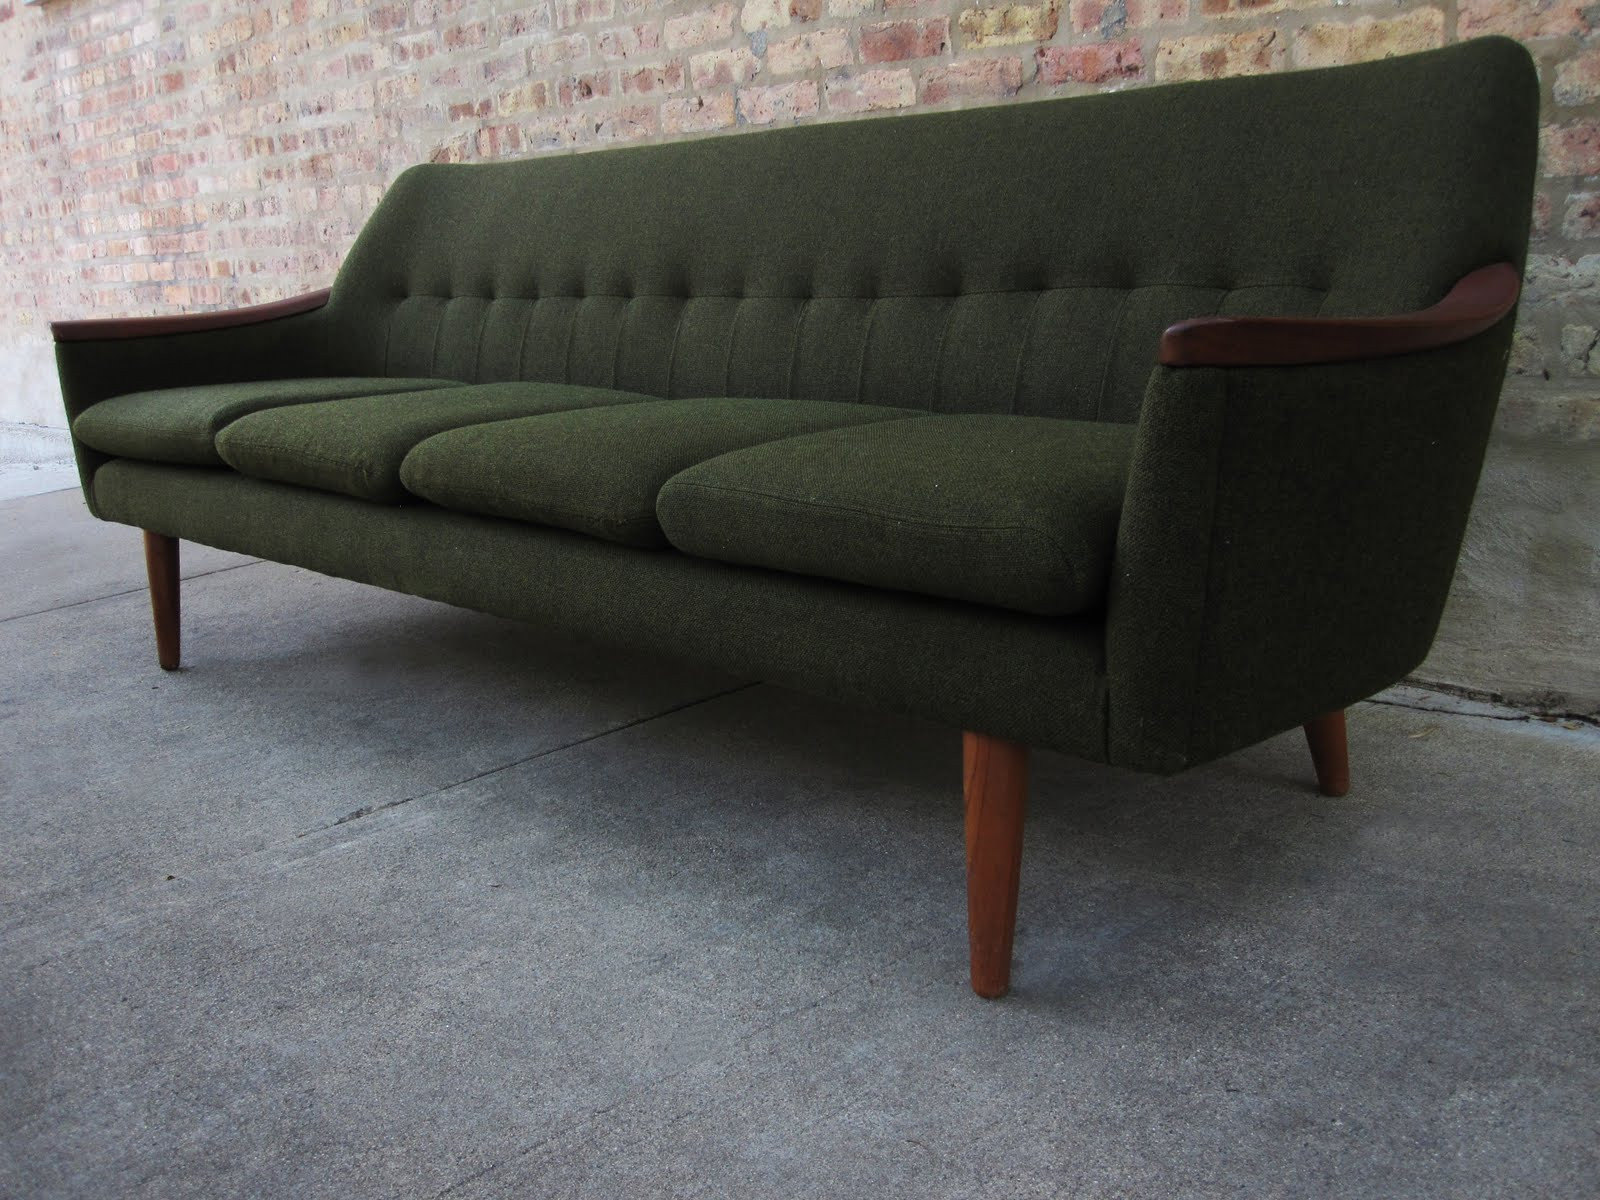 Best ideas about Danish Modern Sofa
. Save or Pin circa midcentury danish modern teak sofa Now.